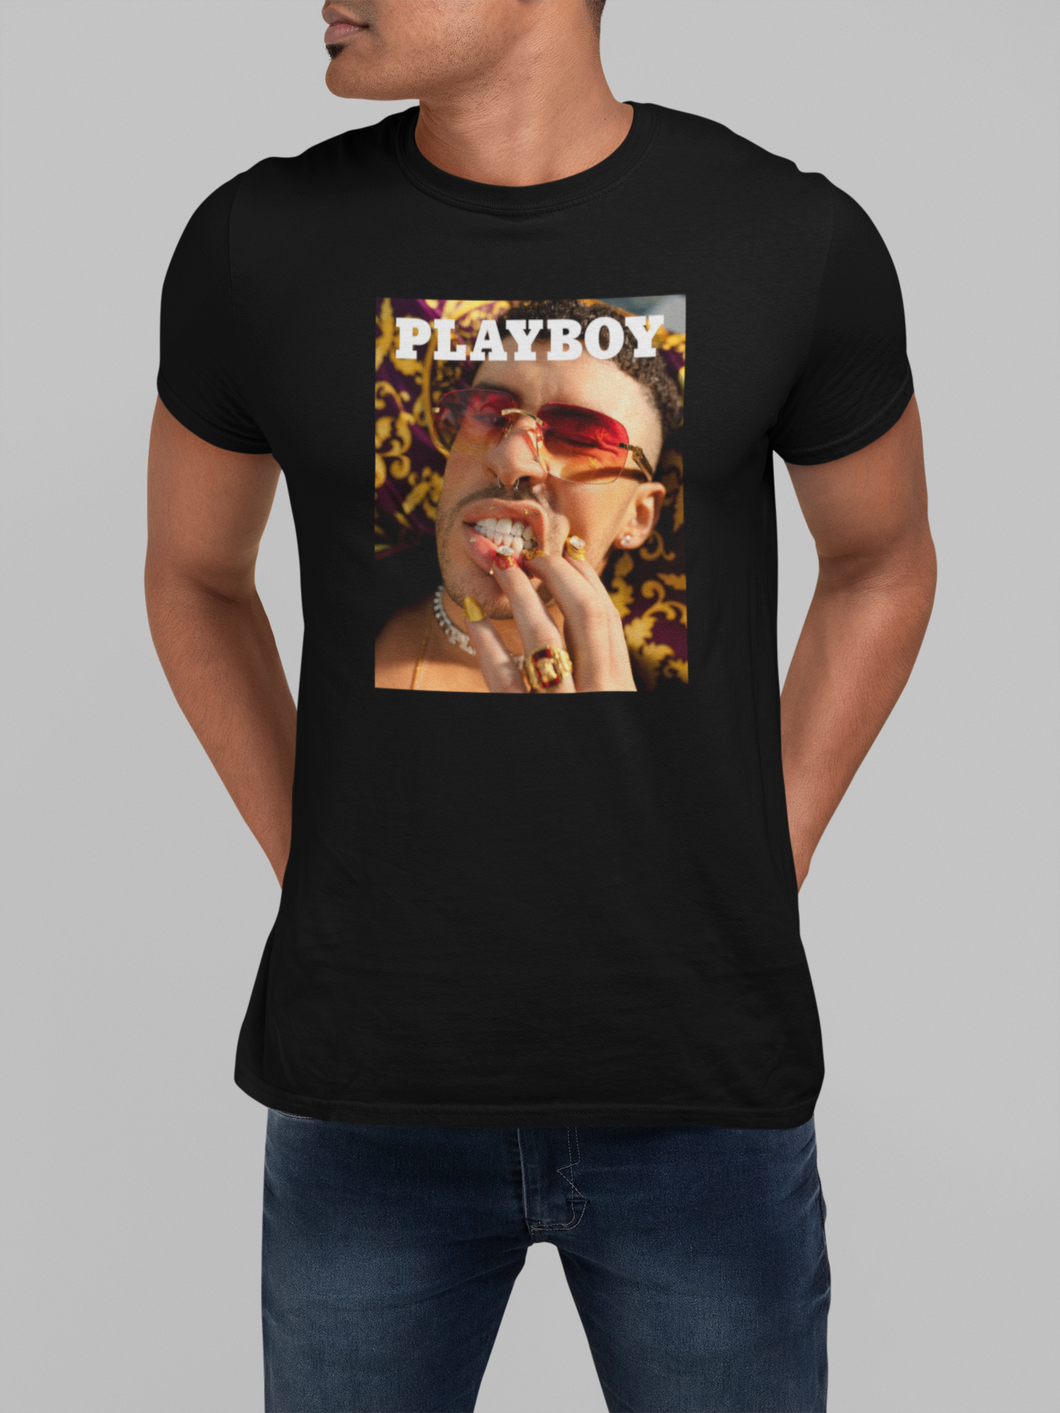 Bad Bunny Playboy T-Shirt